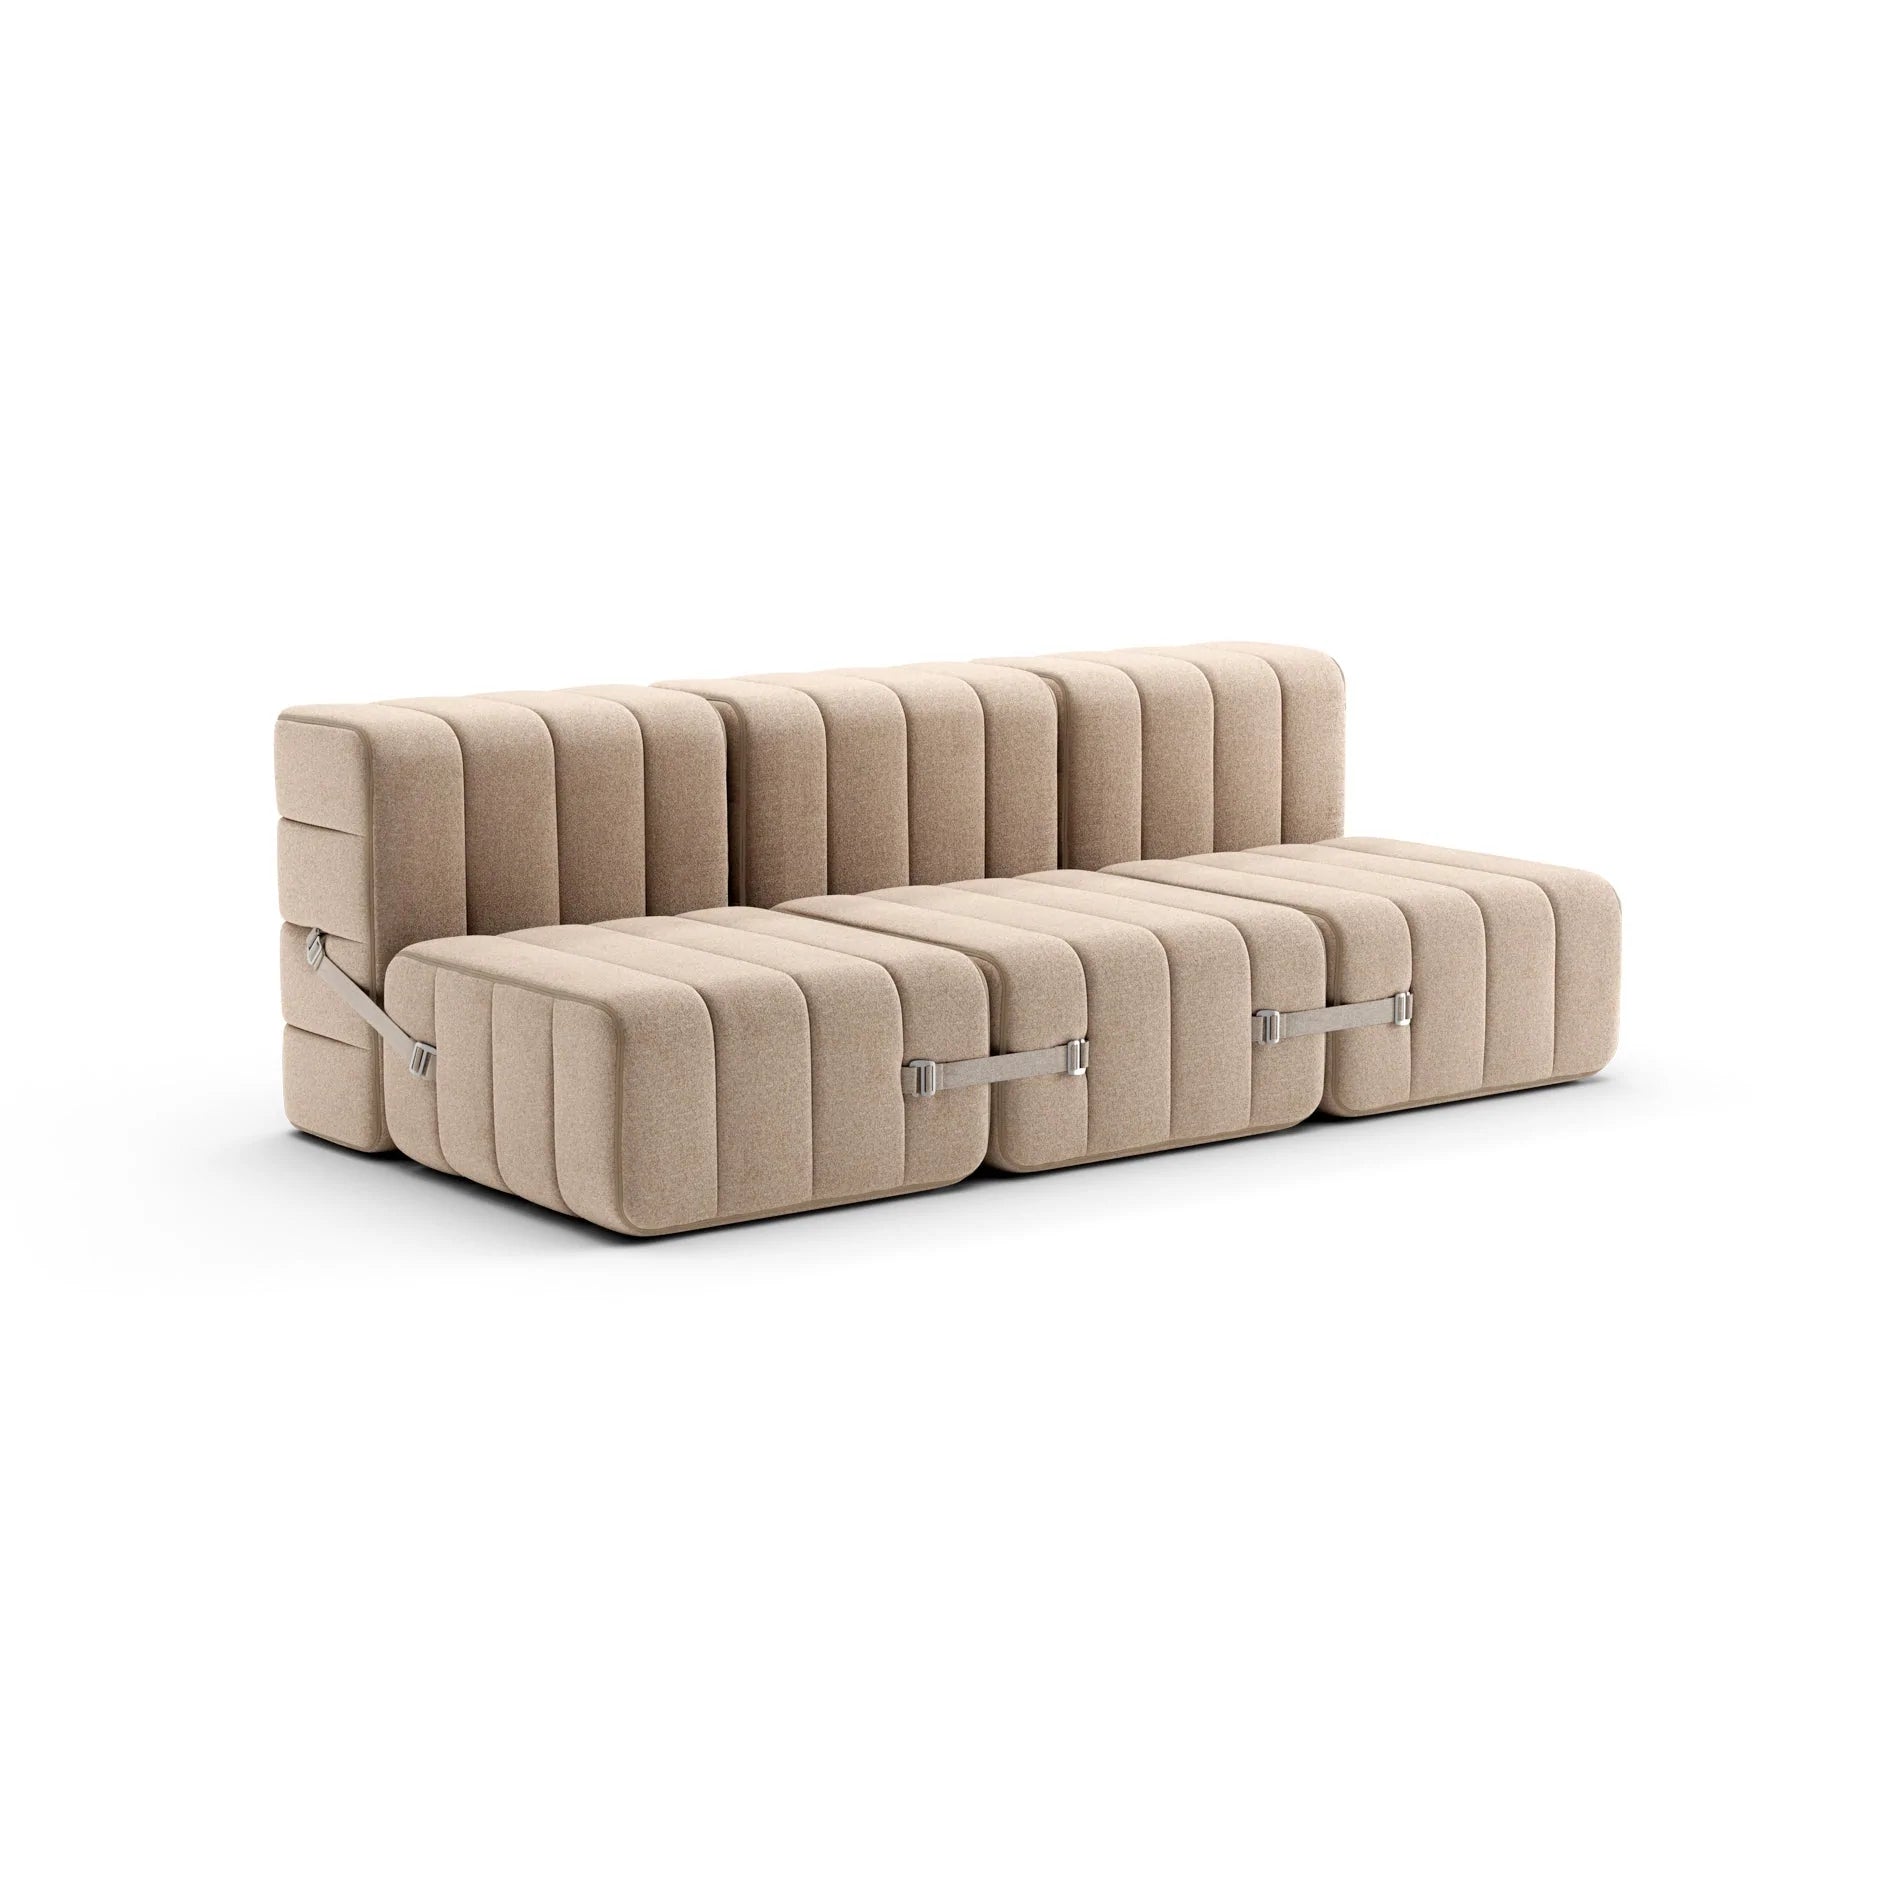 Modular sofa system Curt - Dama beige / gray